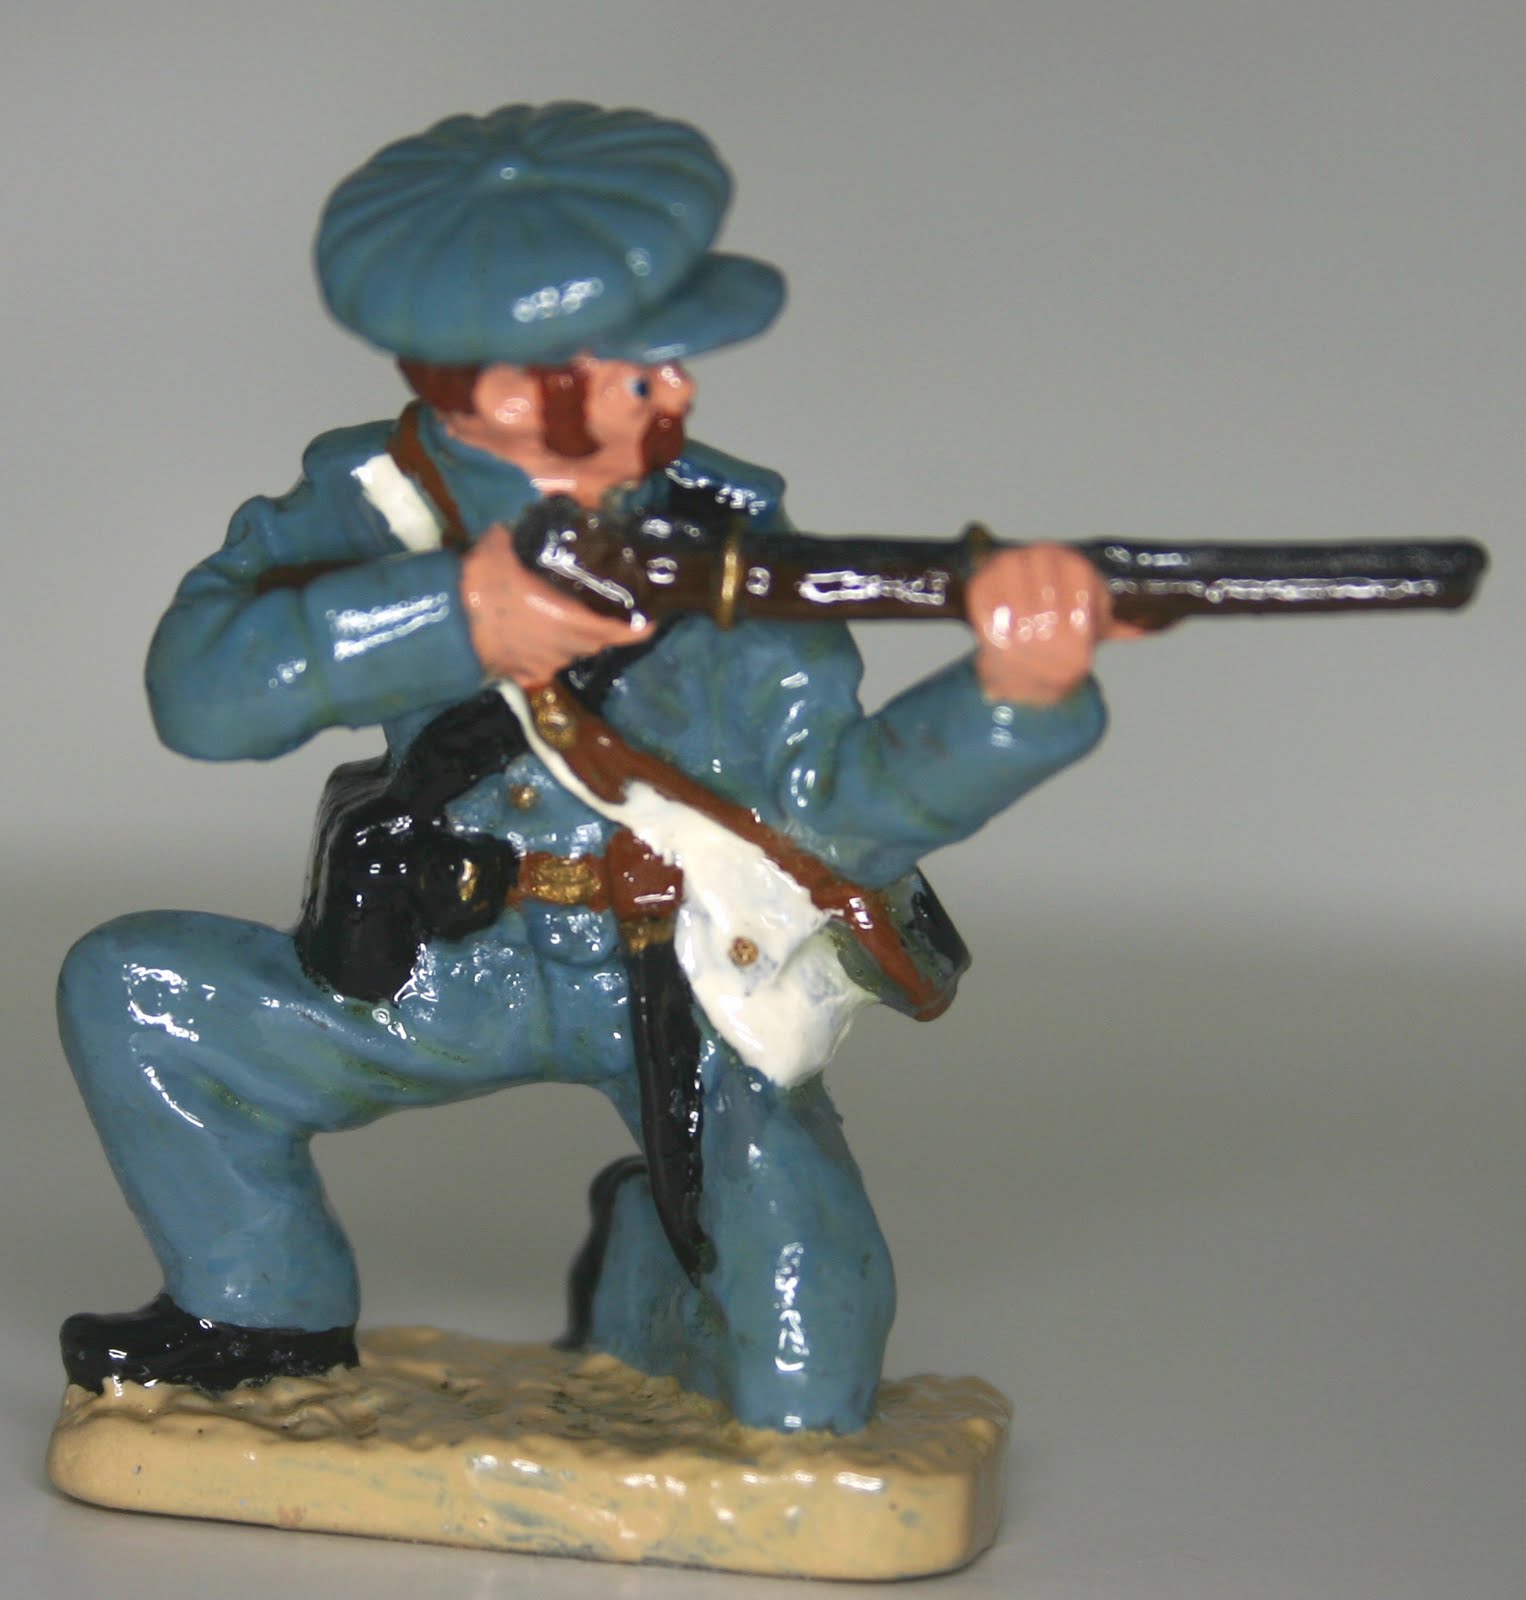 My toy soldier s got dark hair. Солдатики игрушки Аламо. Защитники форта Аламо солдатики. Румынский солдатик игрушка. Солдатики Помни Аламо.